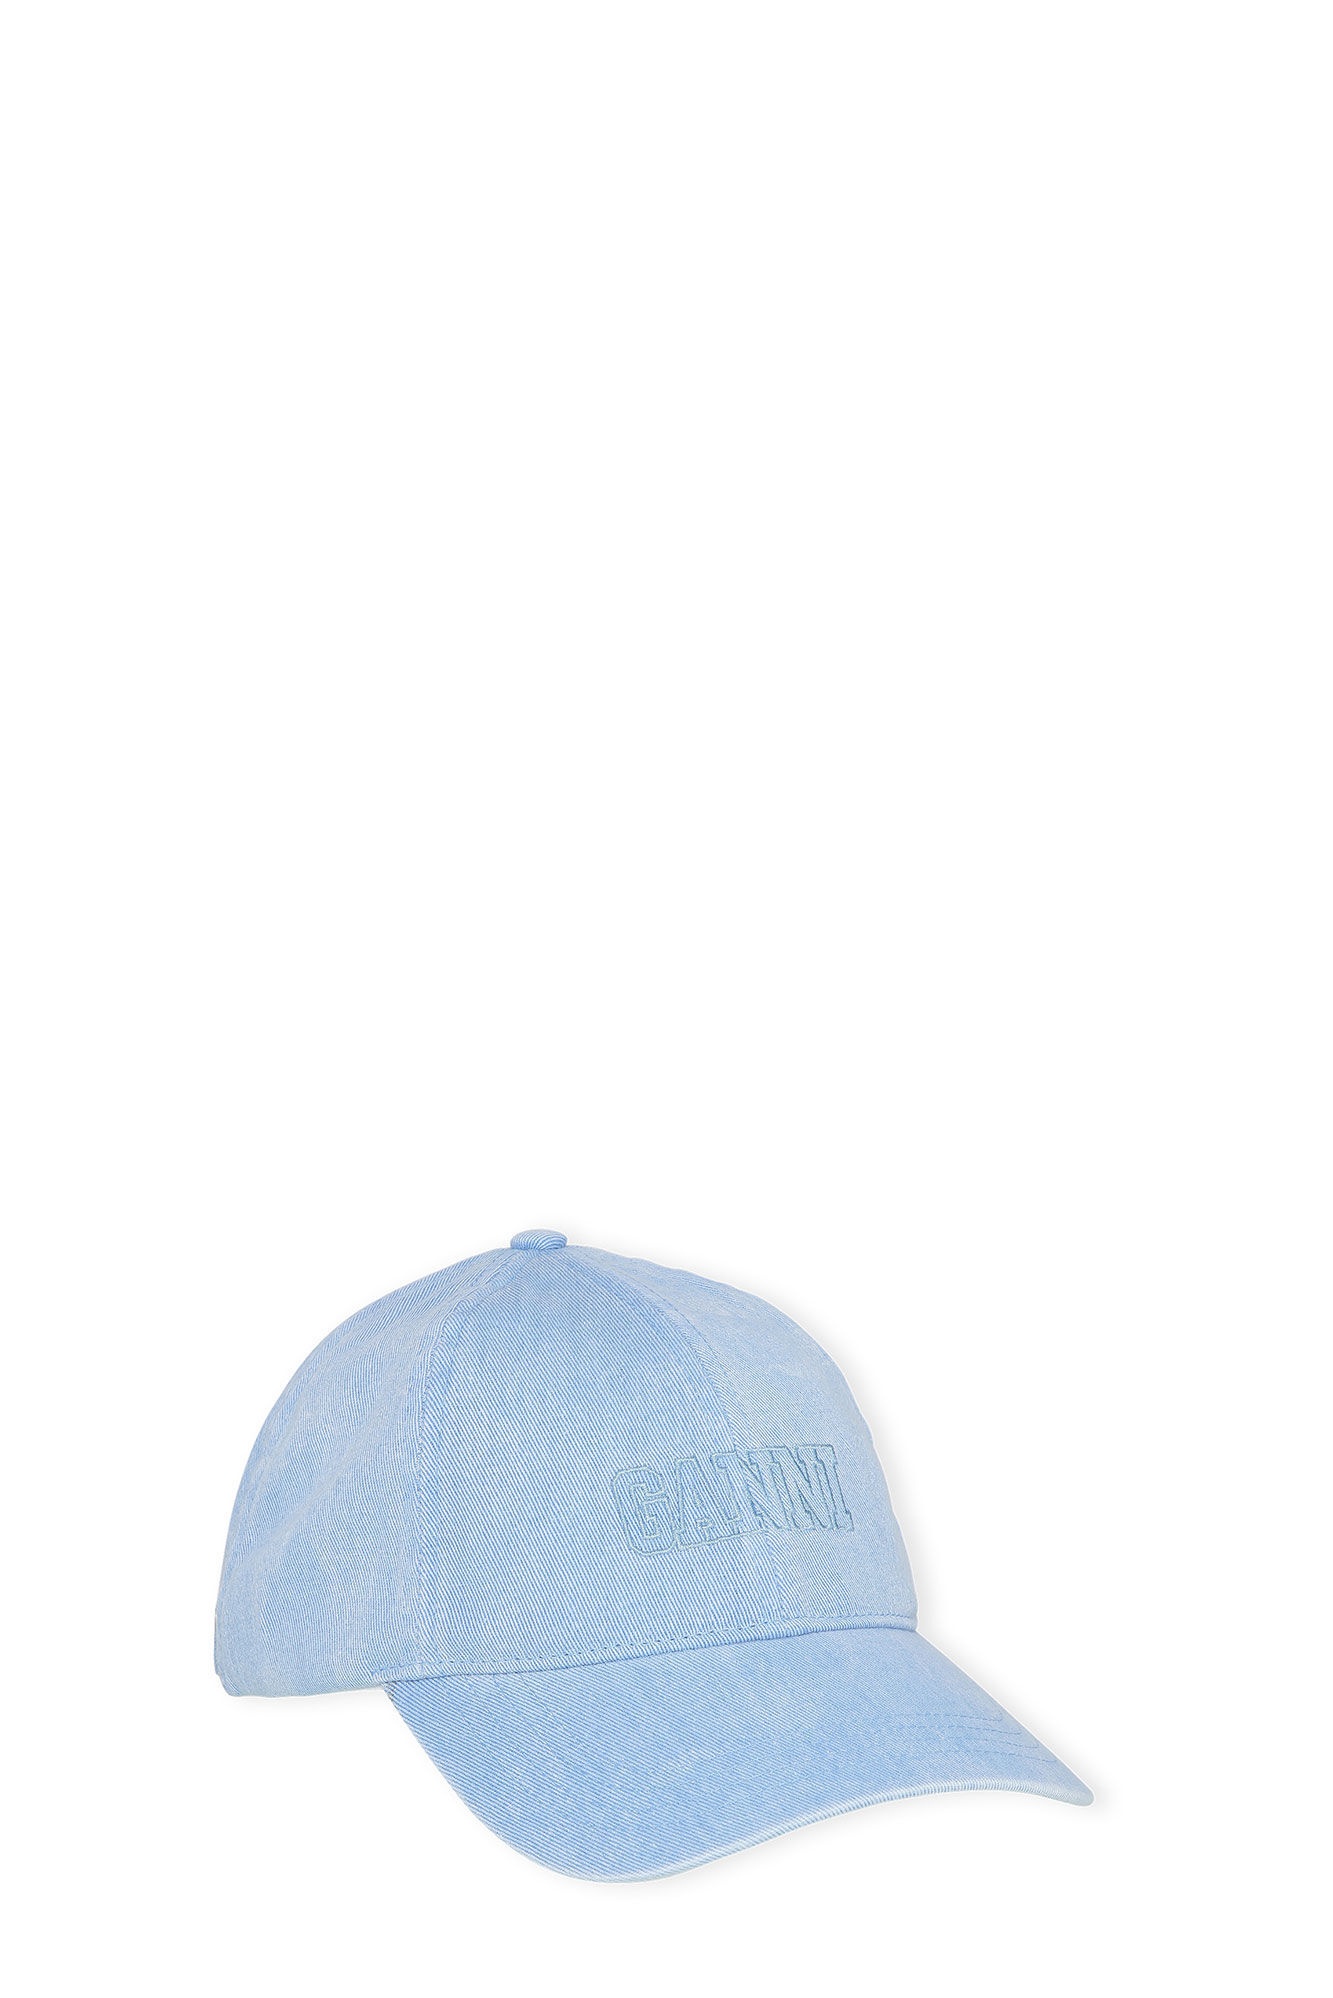 BLUE EMBROIDERED DENIM LOGO CAP - 1